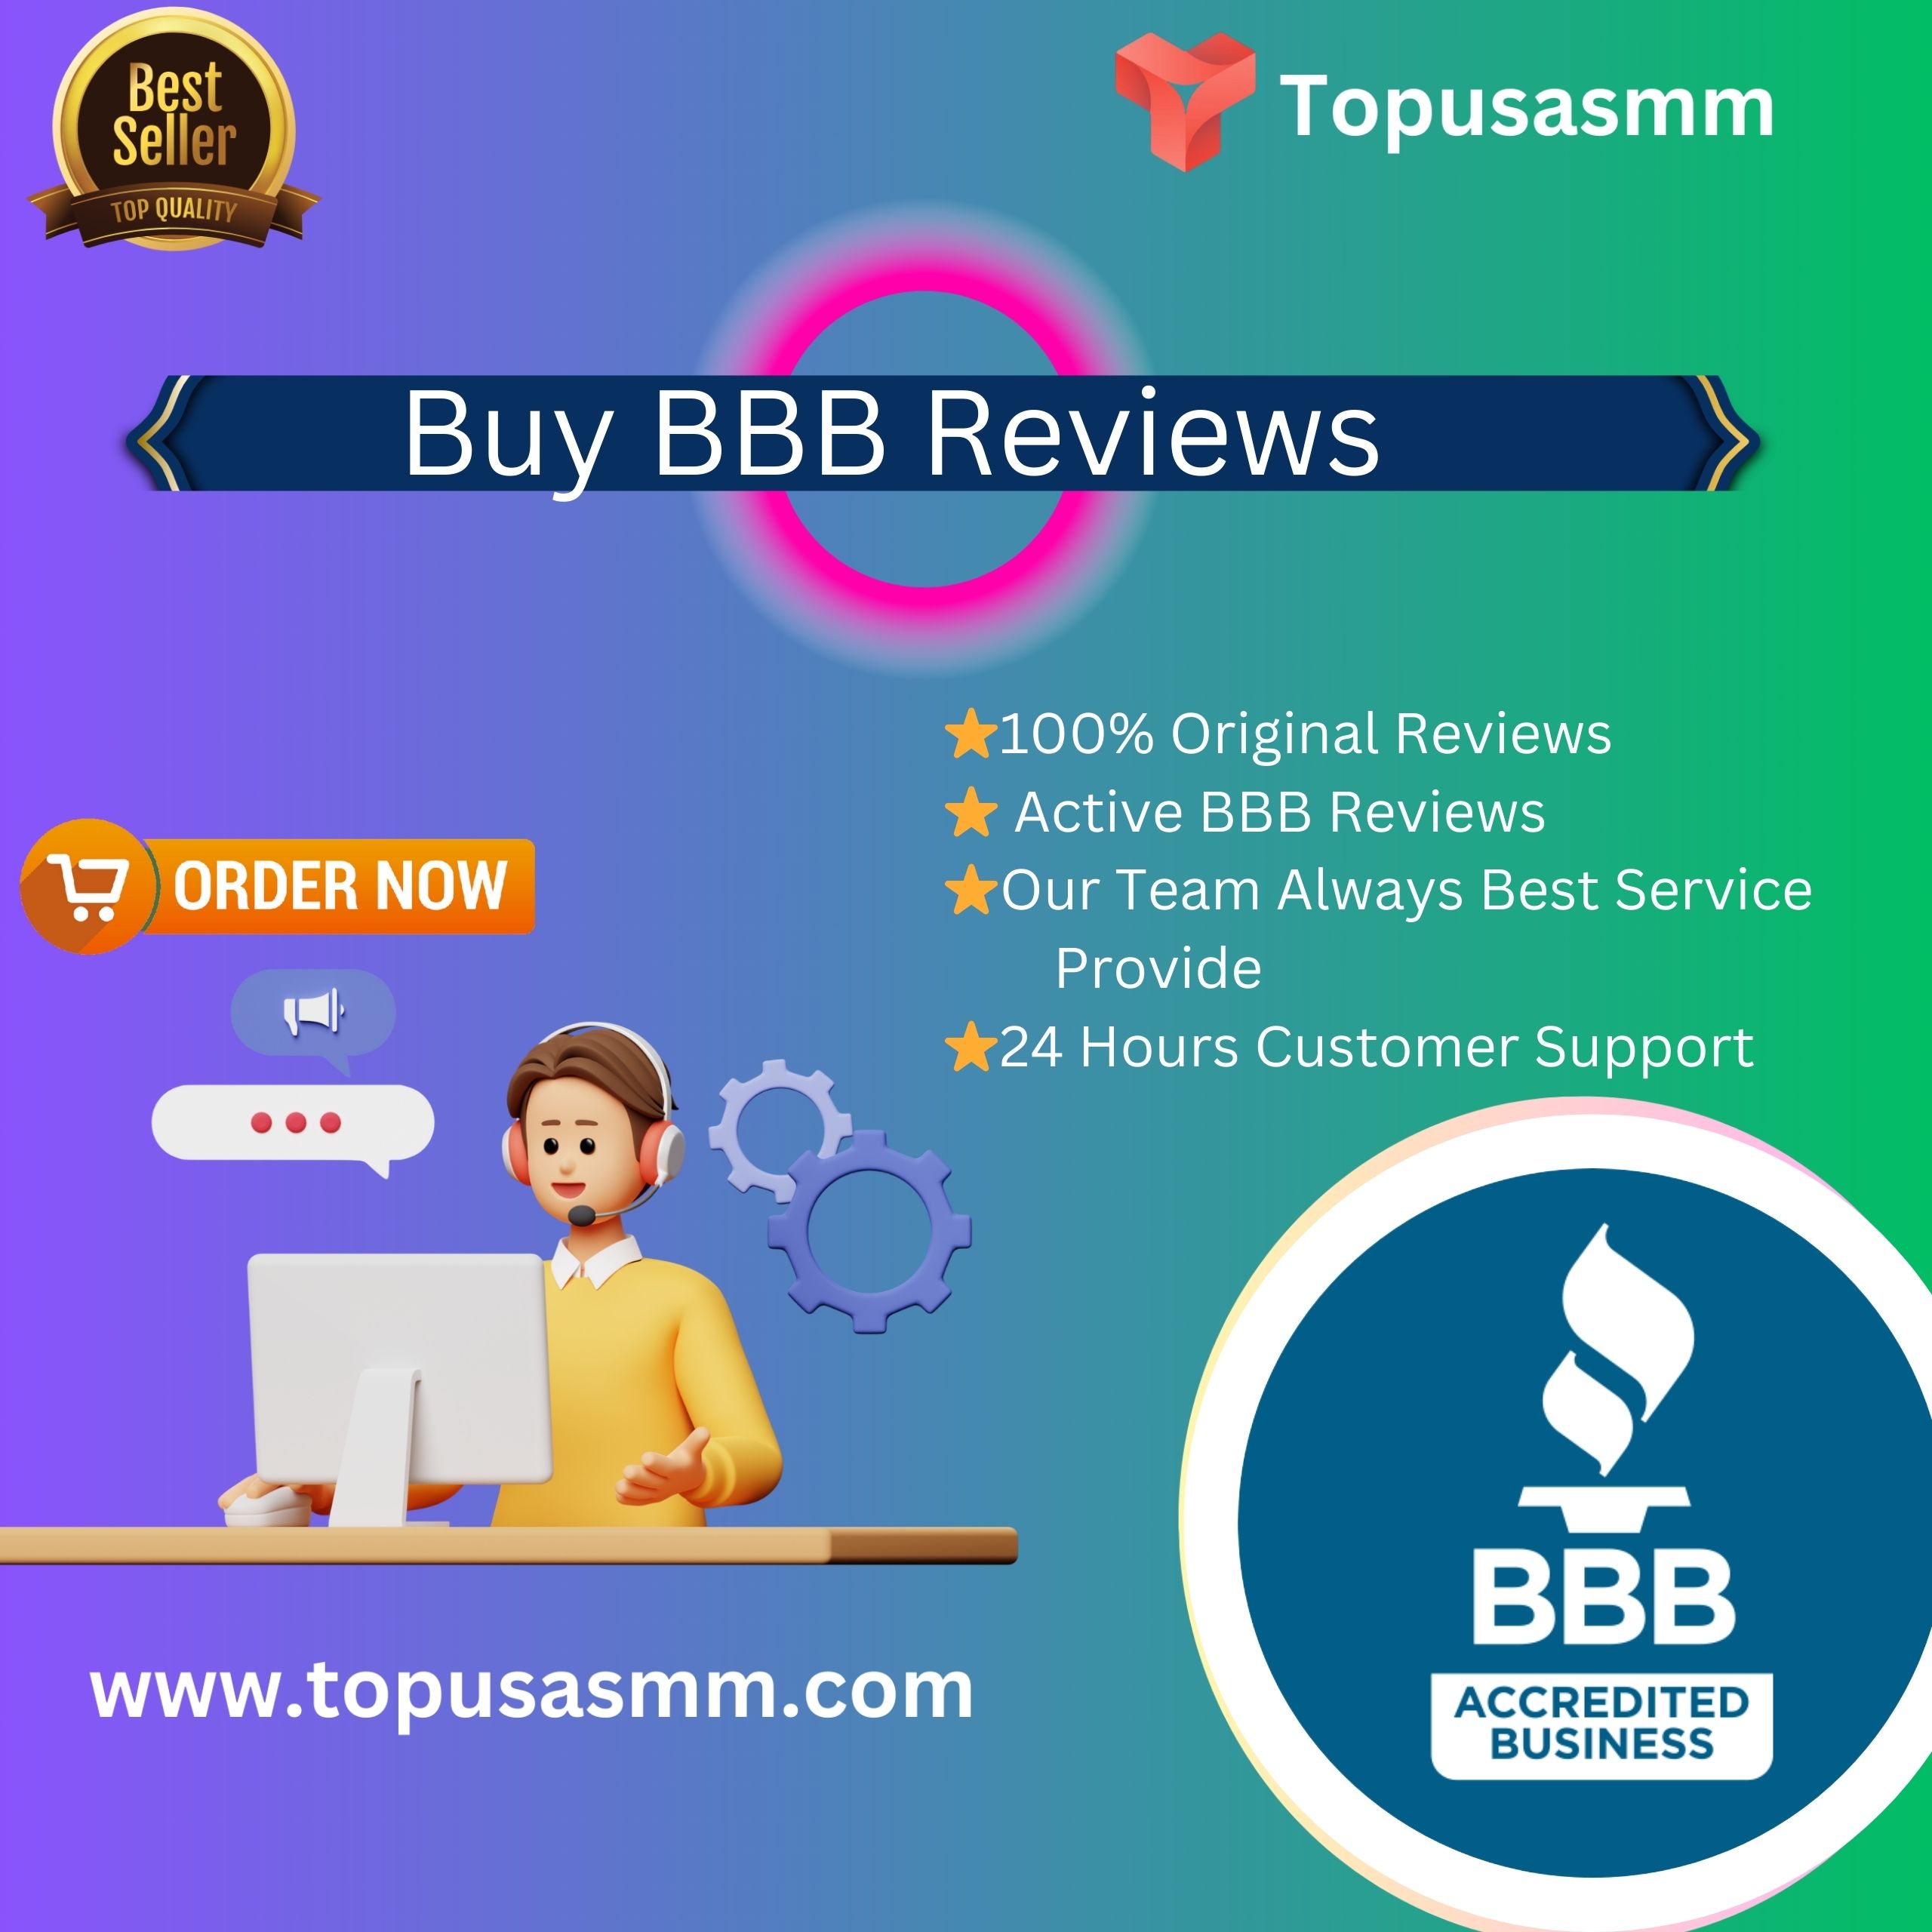 Buy BBB Reviews - Top USA SMM